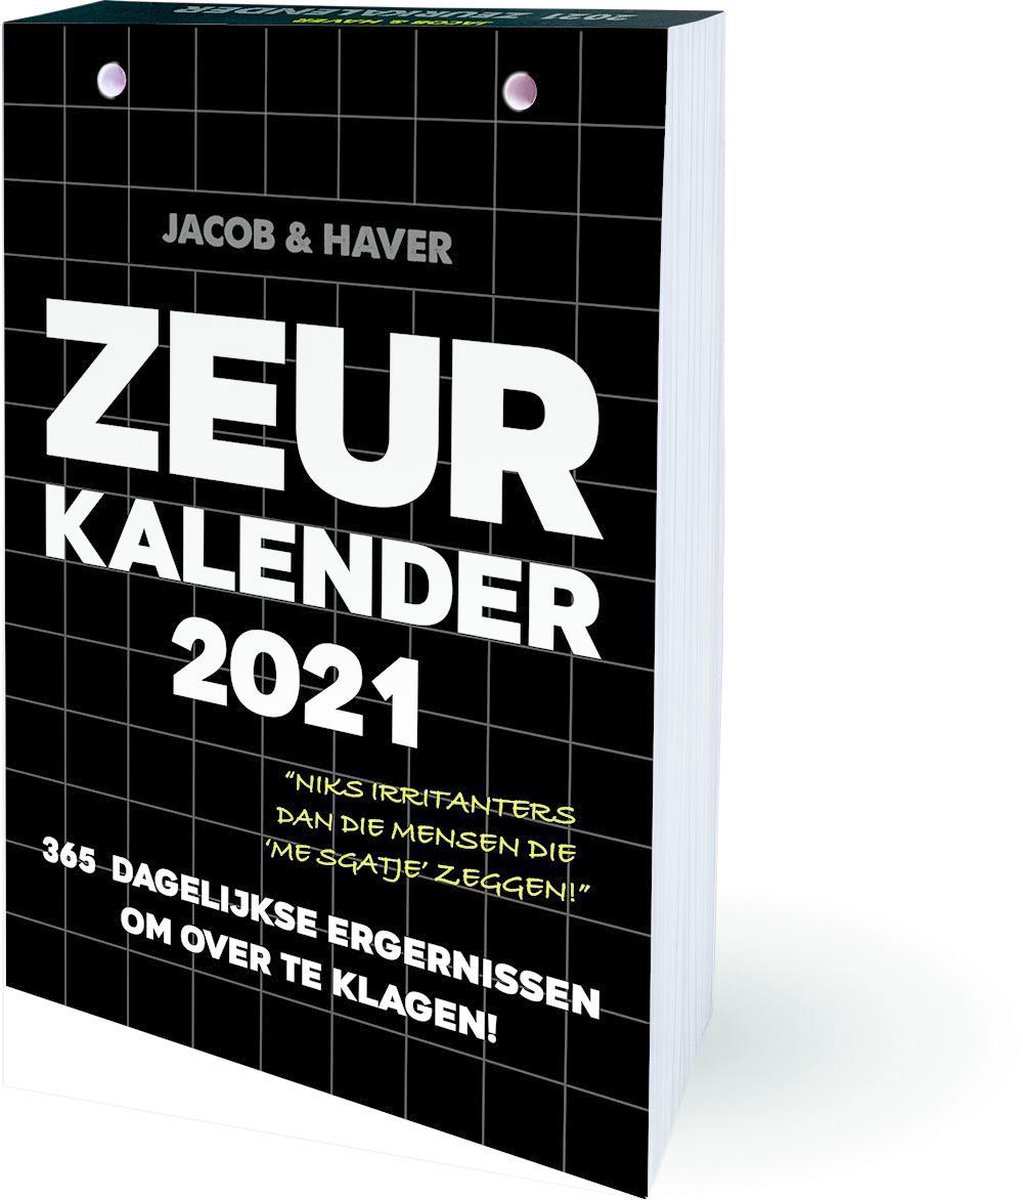 Scheurkalender - 2021 - Zeurkalender - Interstat